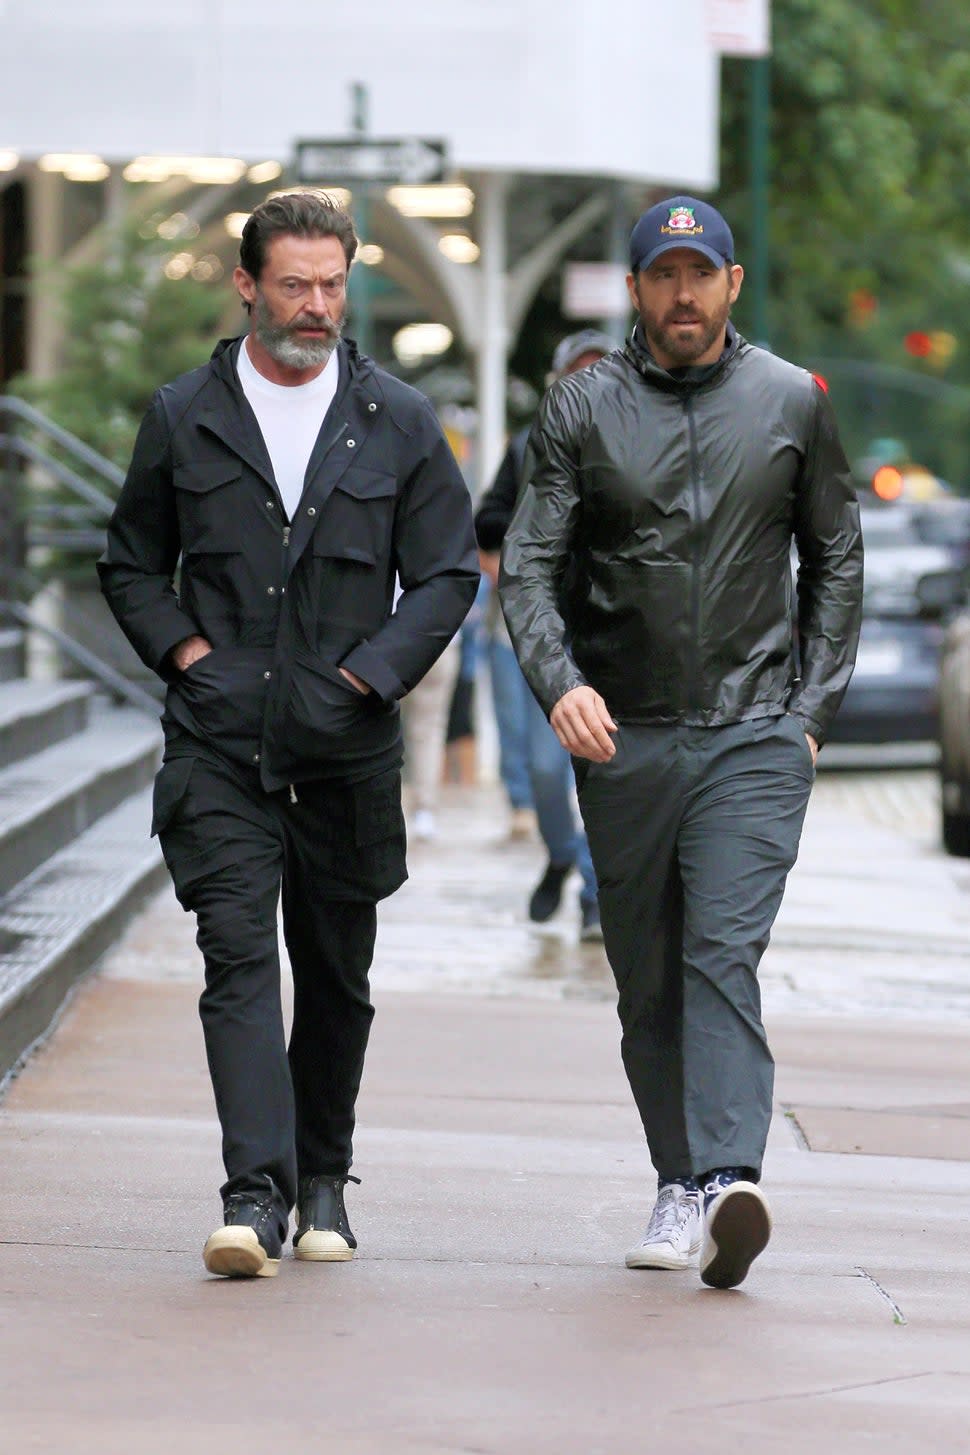 Hugh Jackman and Ryan Reynolds take a stroll in NYC